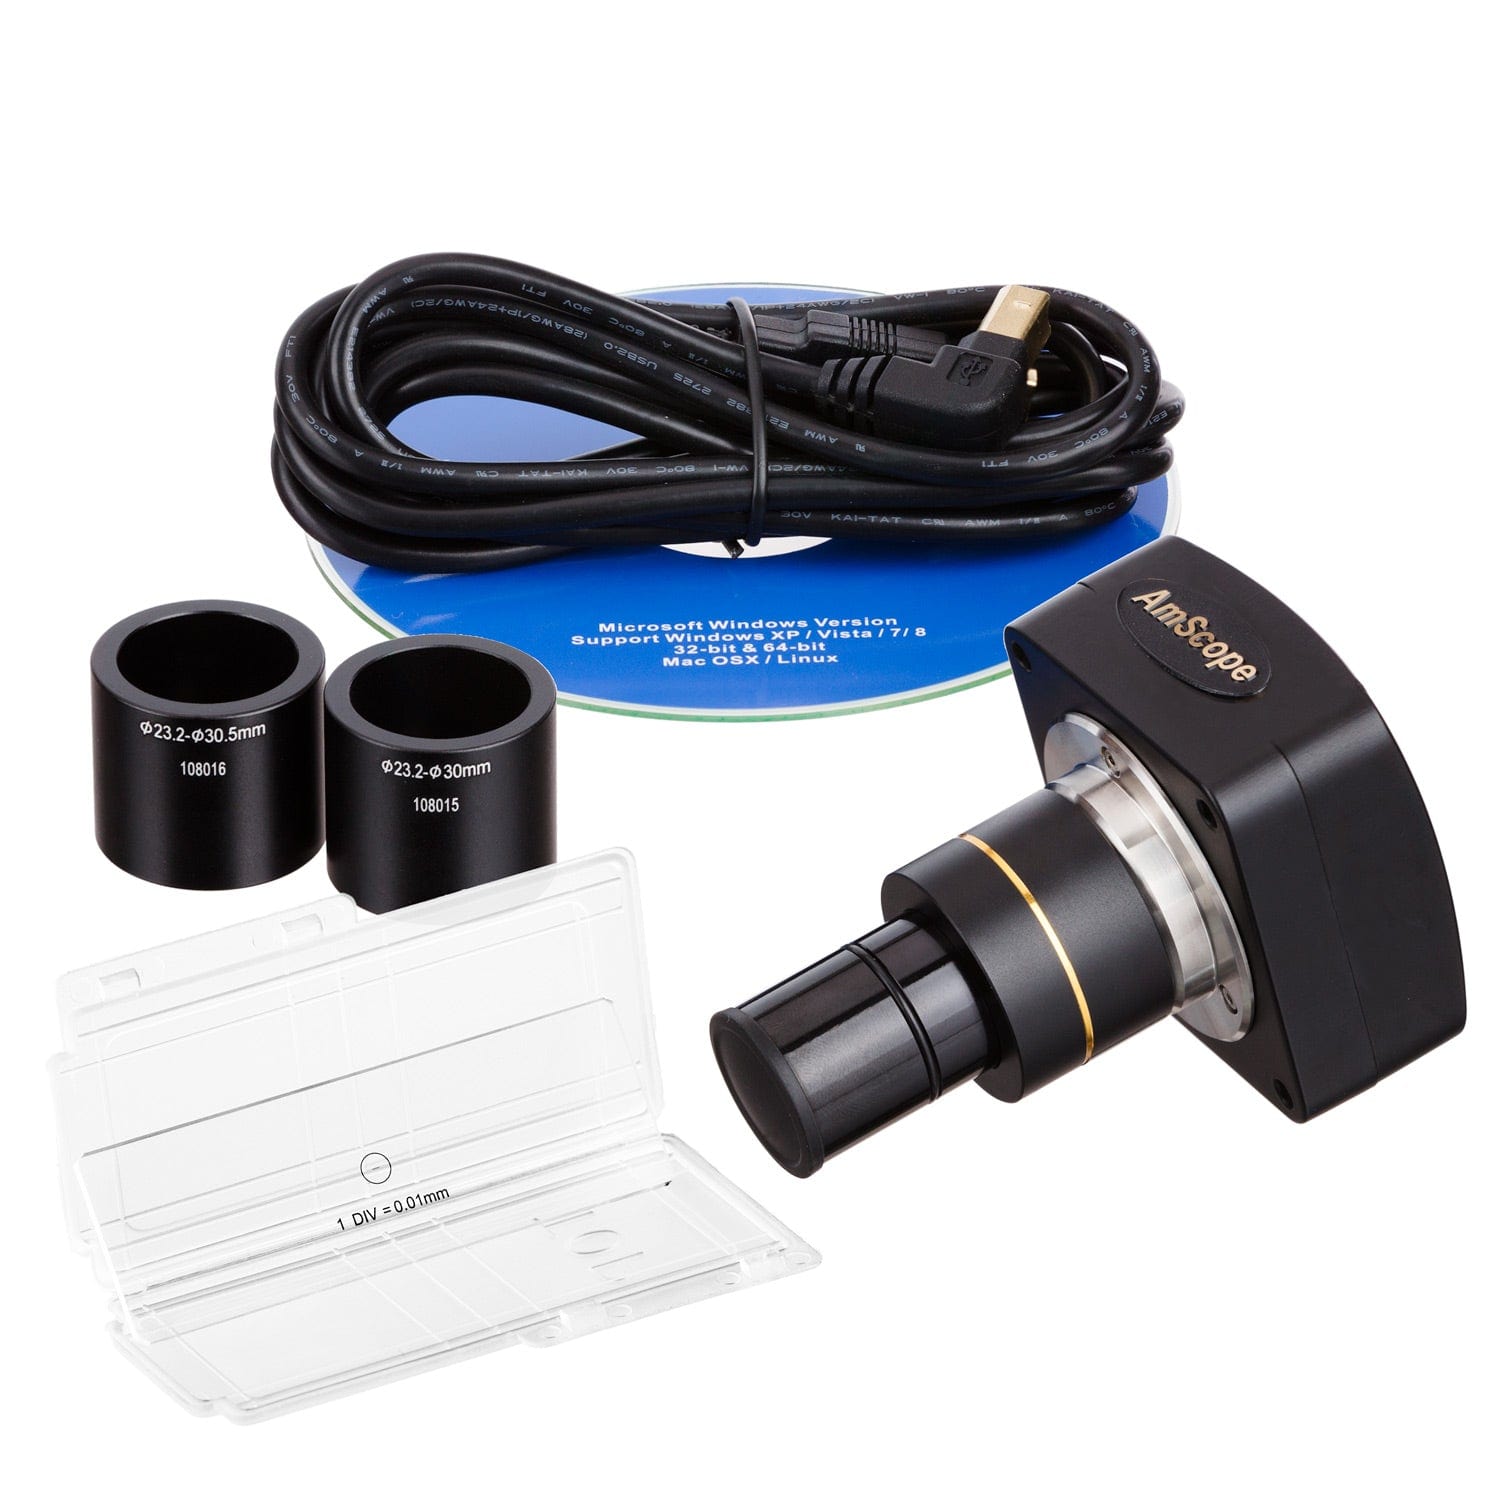 Top factors to consider when choosing a microscope camera - e-con Systems